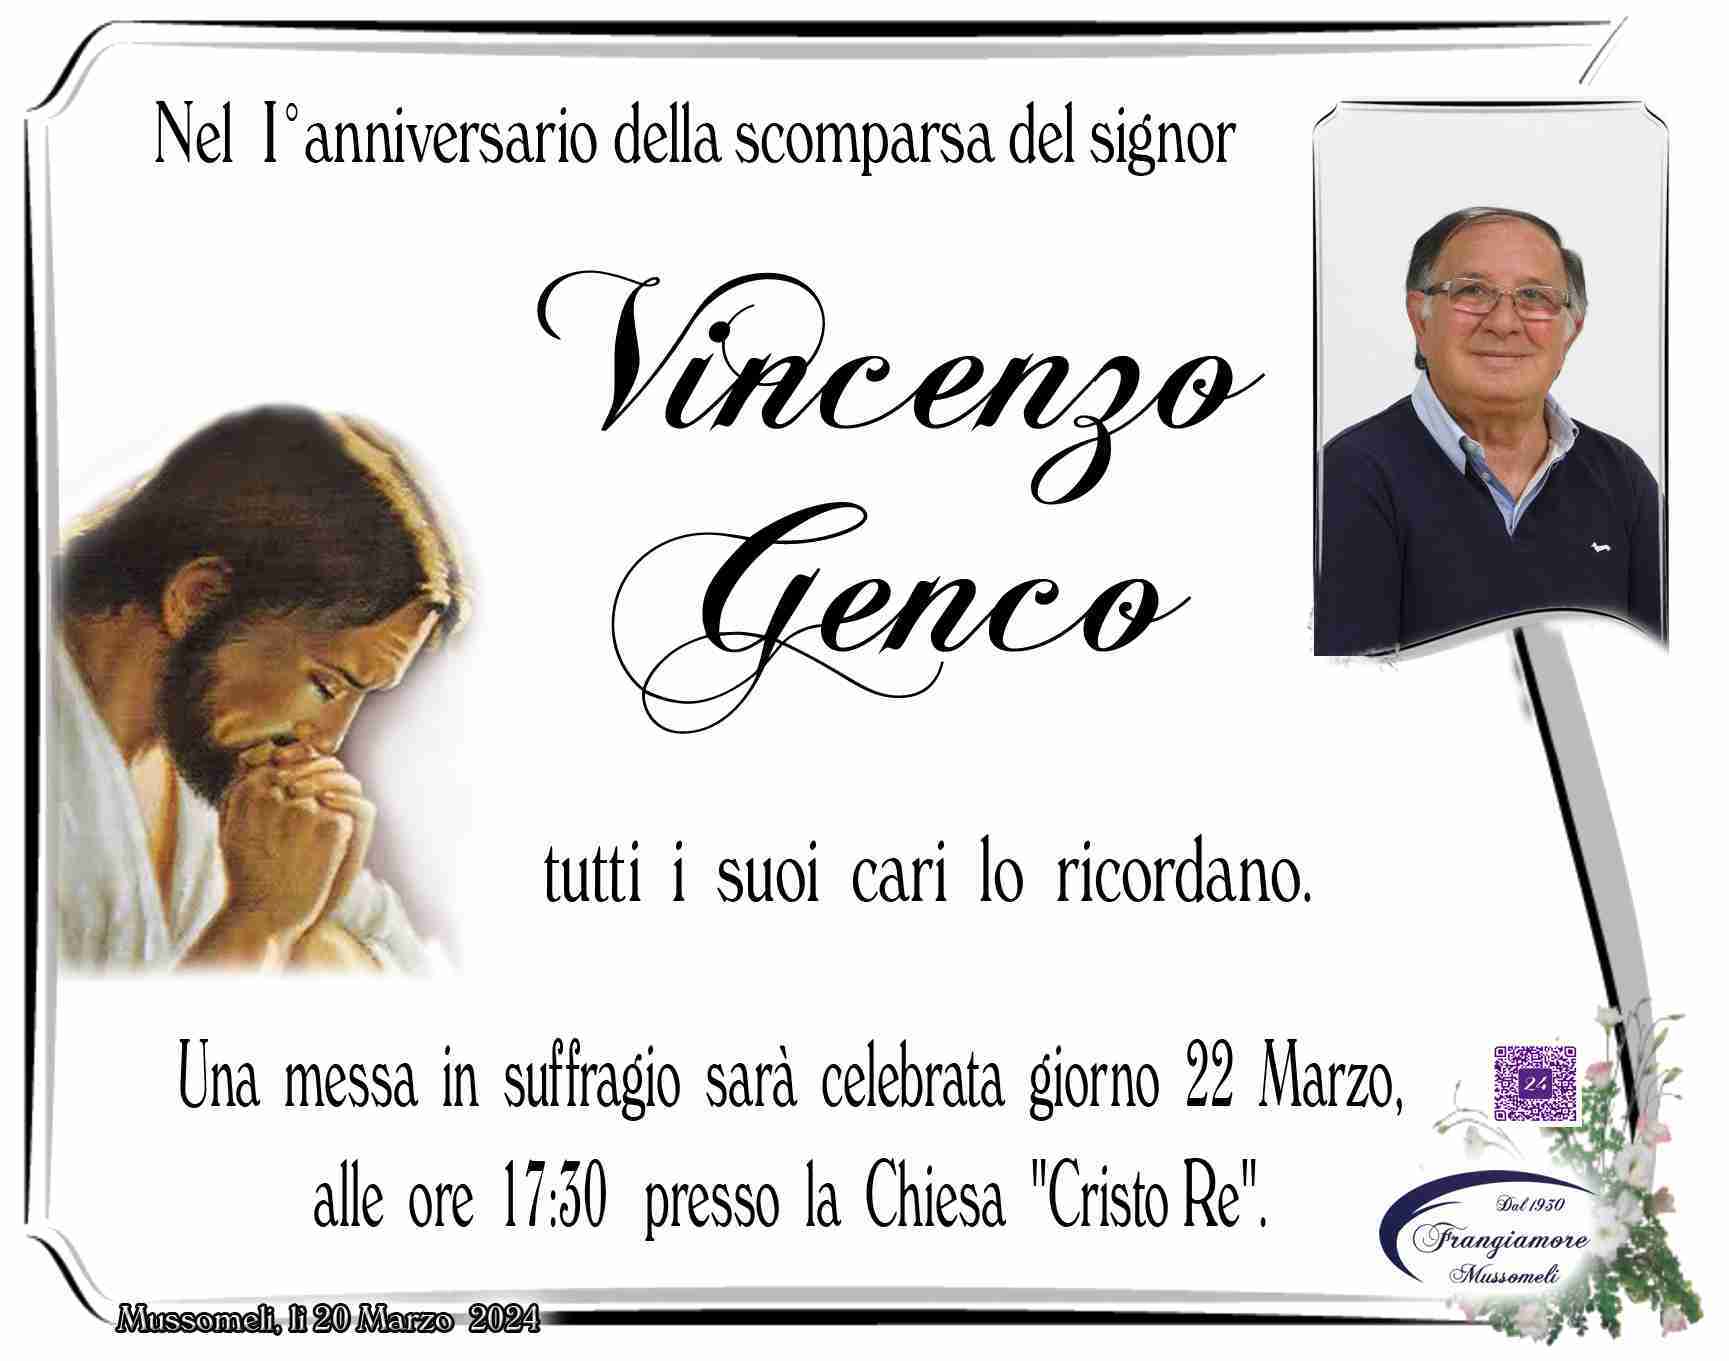 Vincenzo Genco